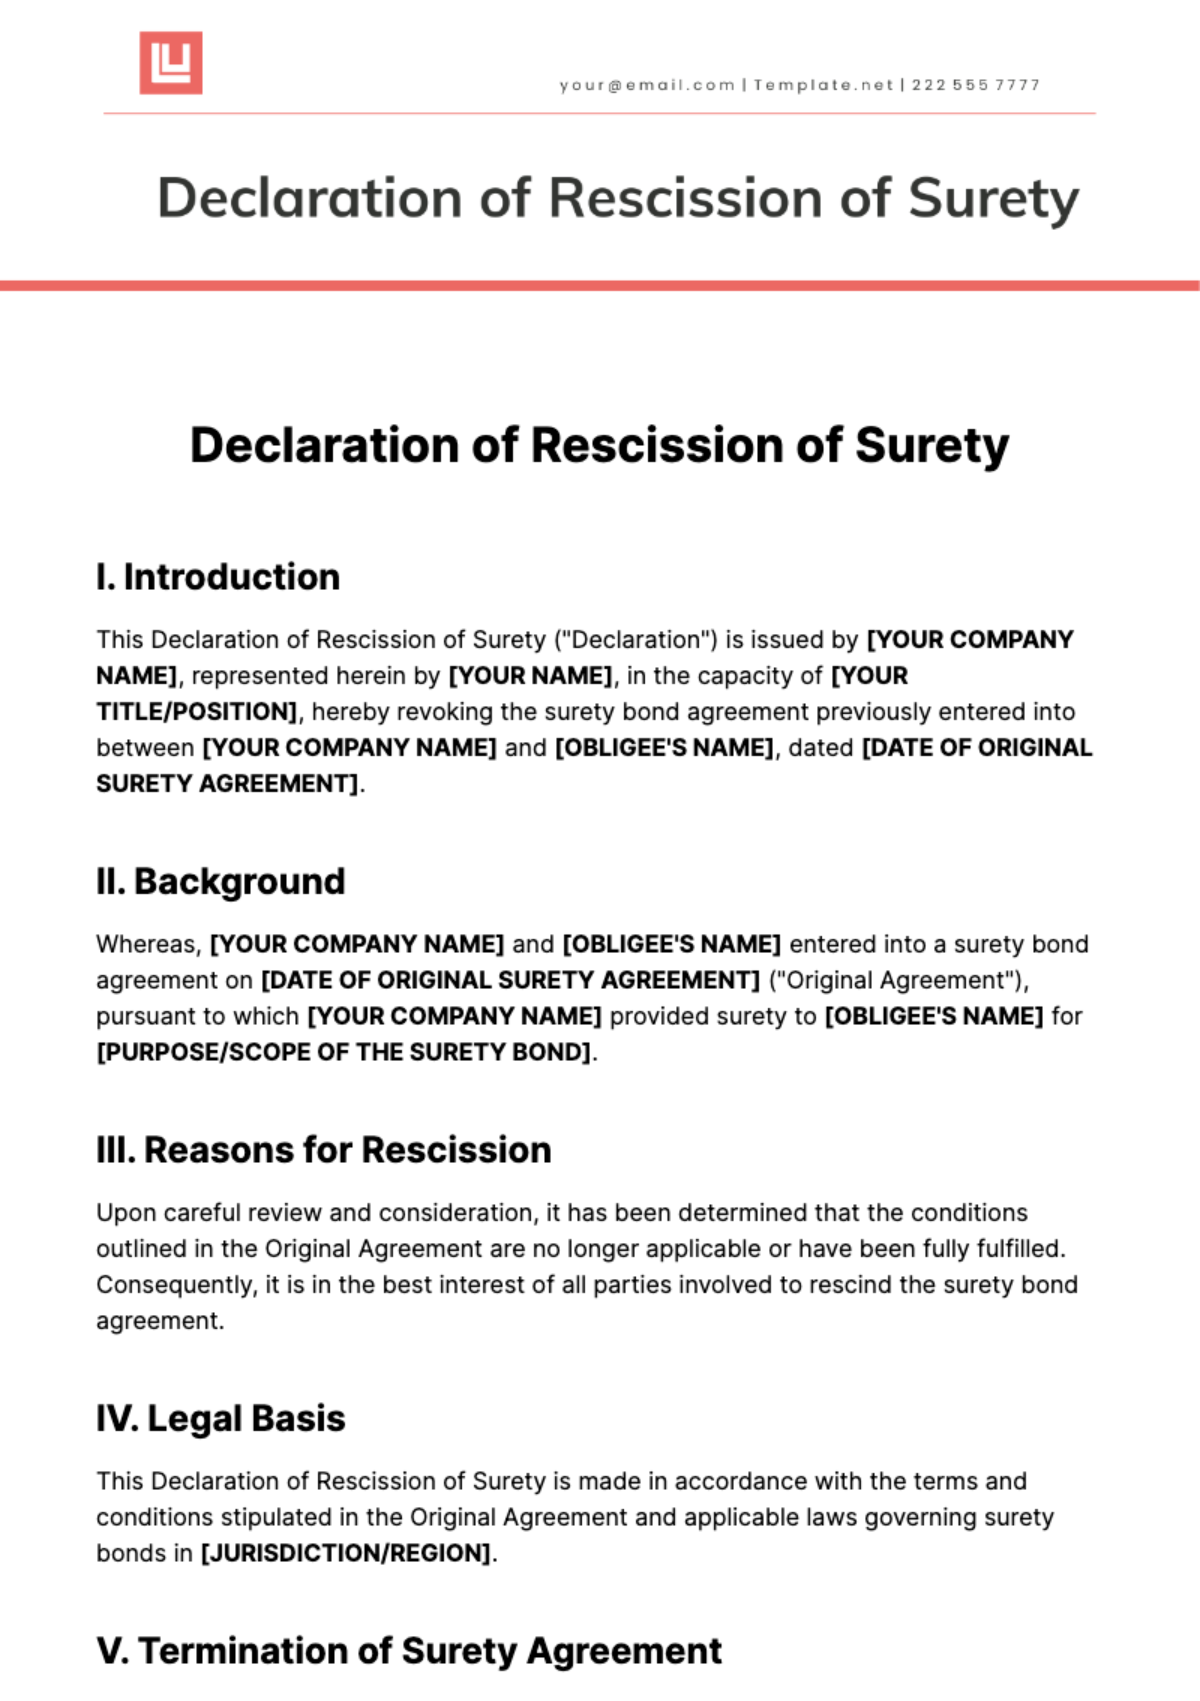 Free Declaration Of Rescission Of Surety Template